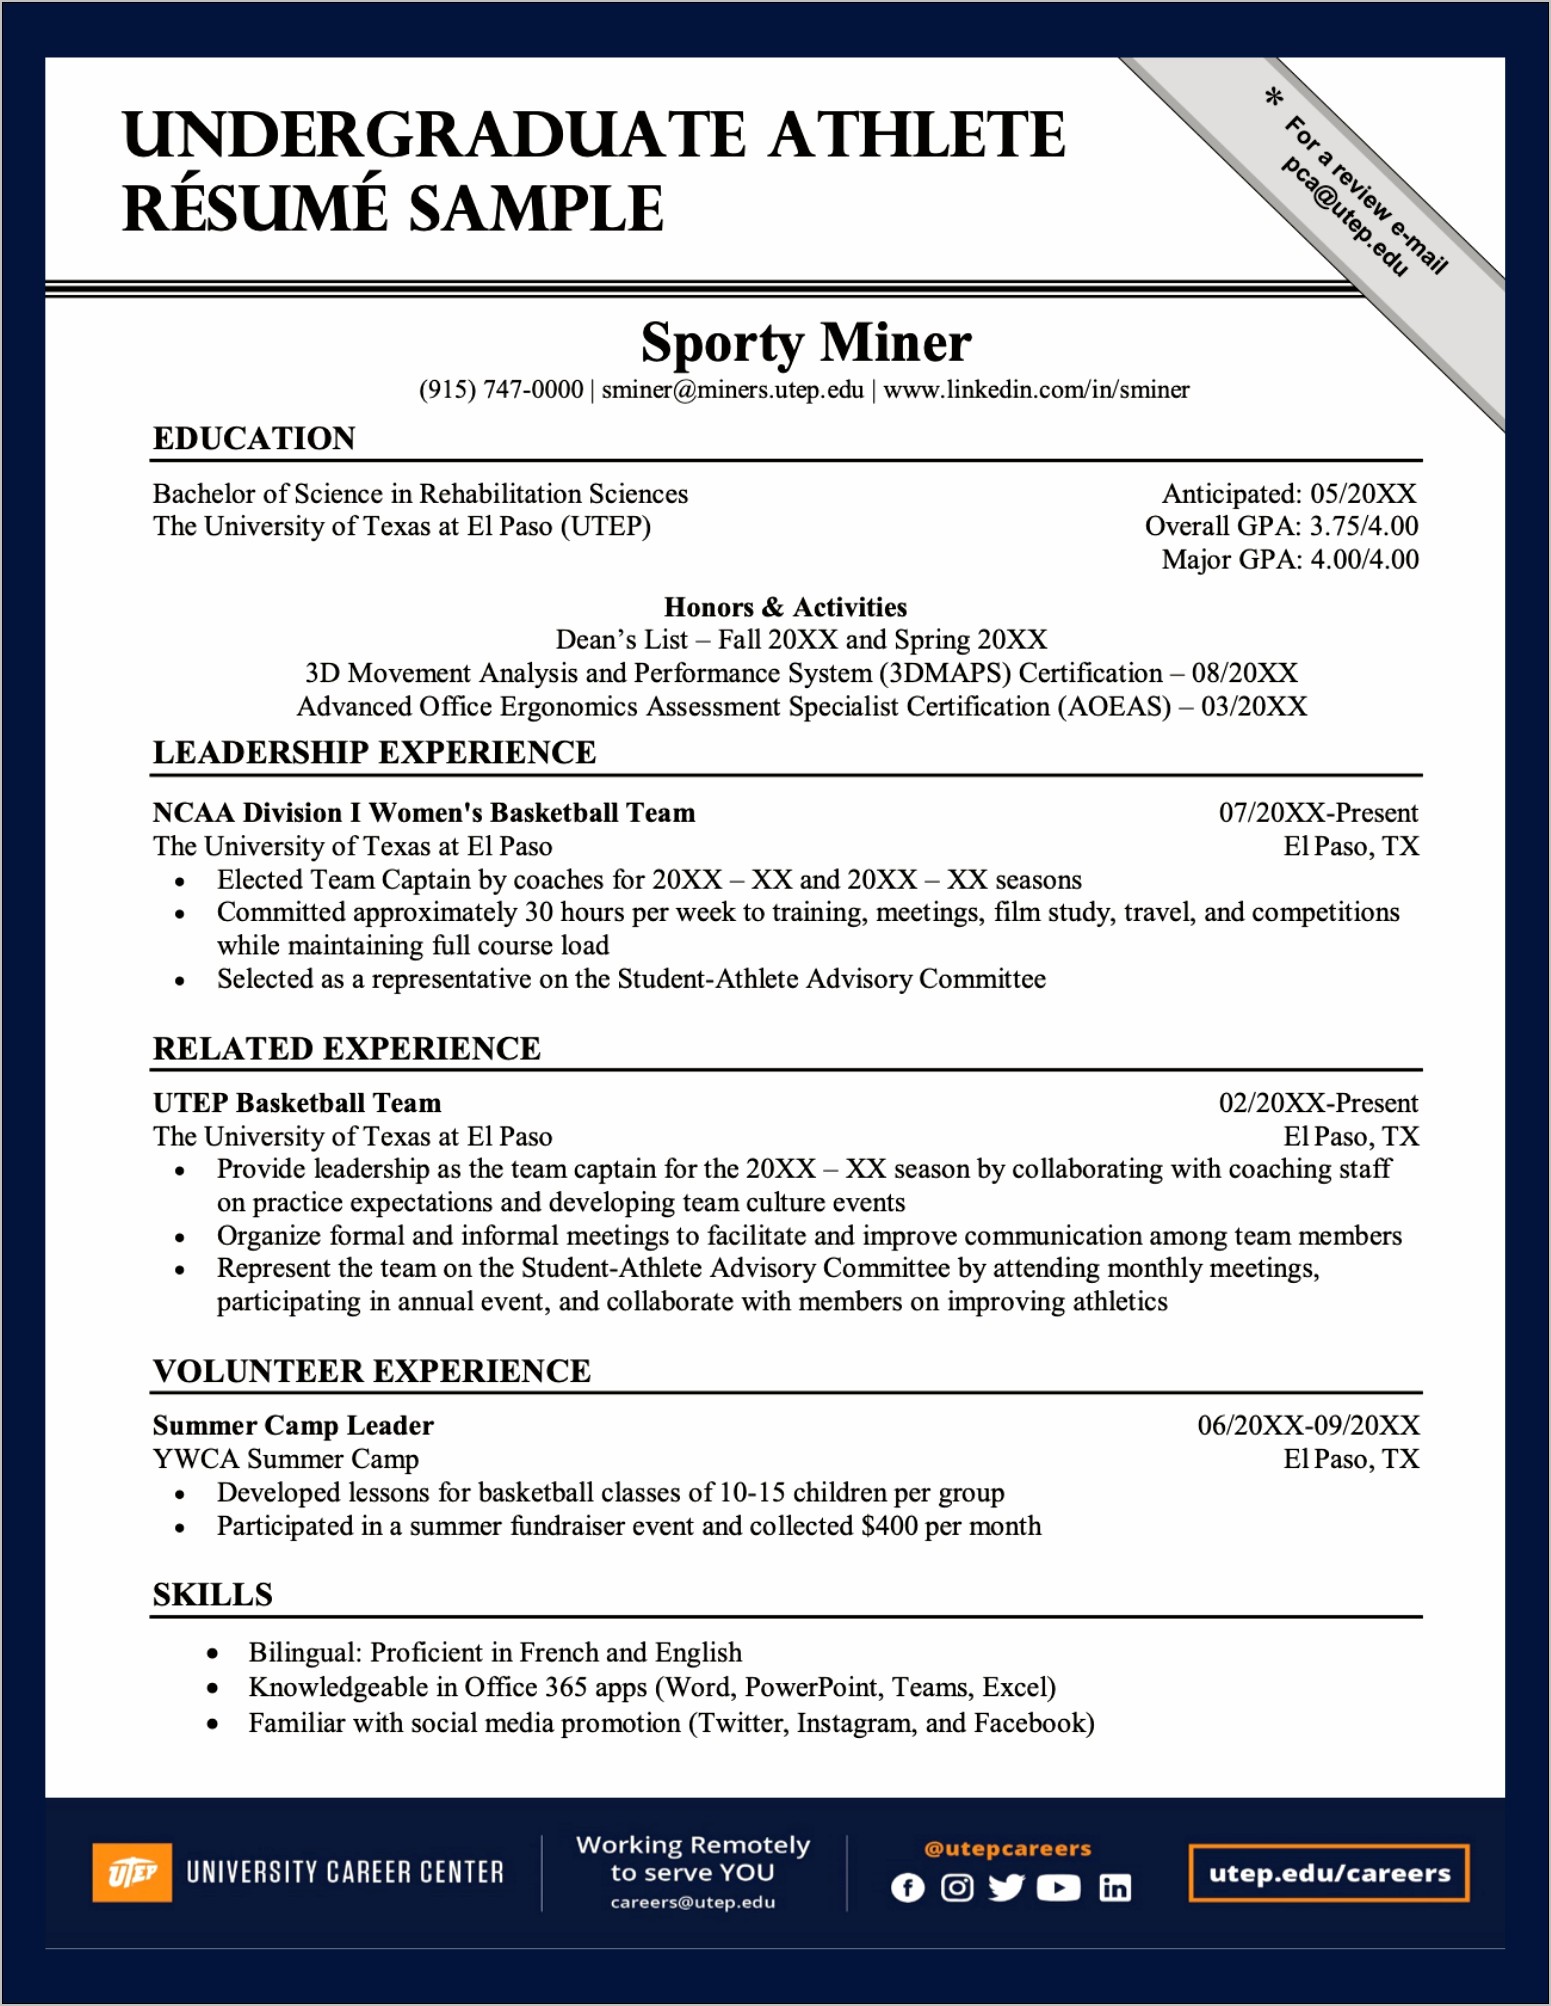 Resume Sample For An Athlete